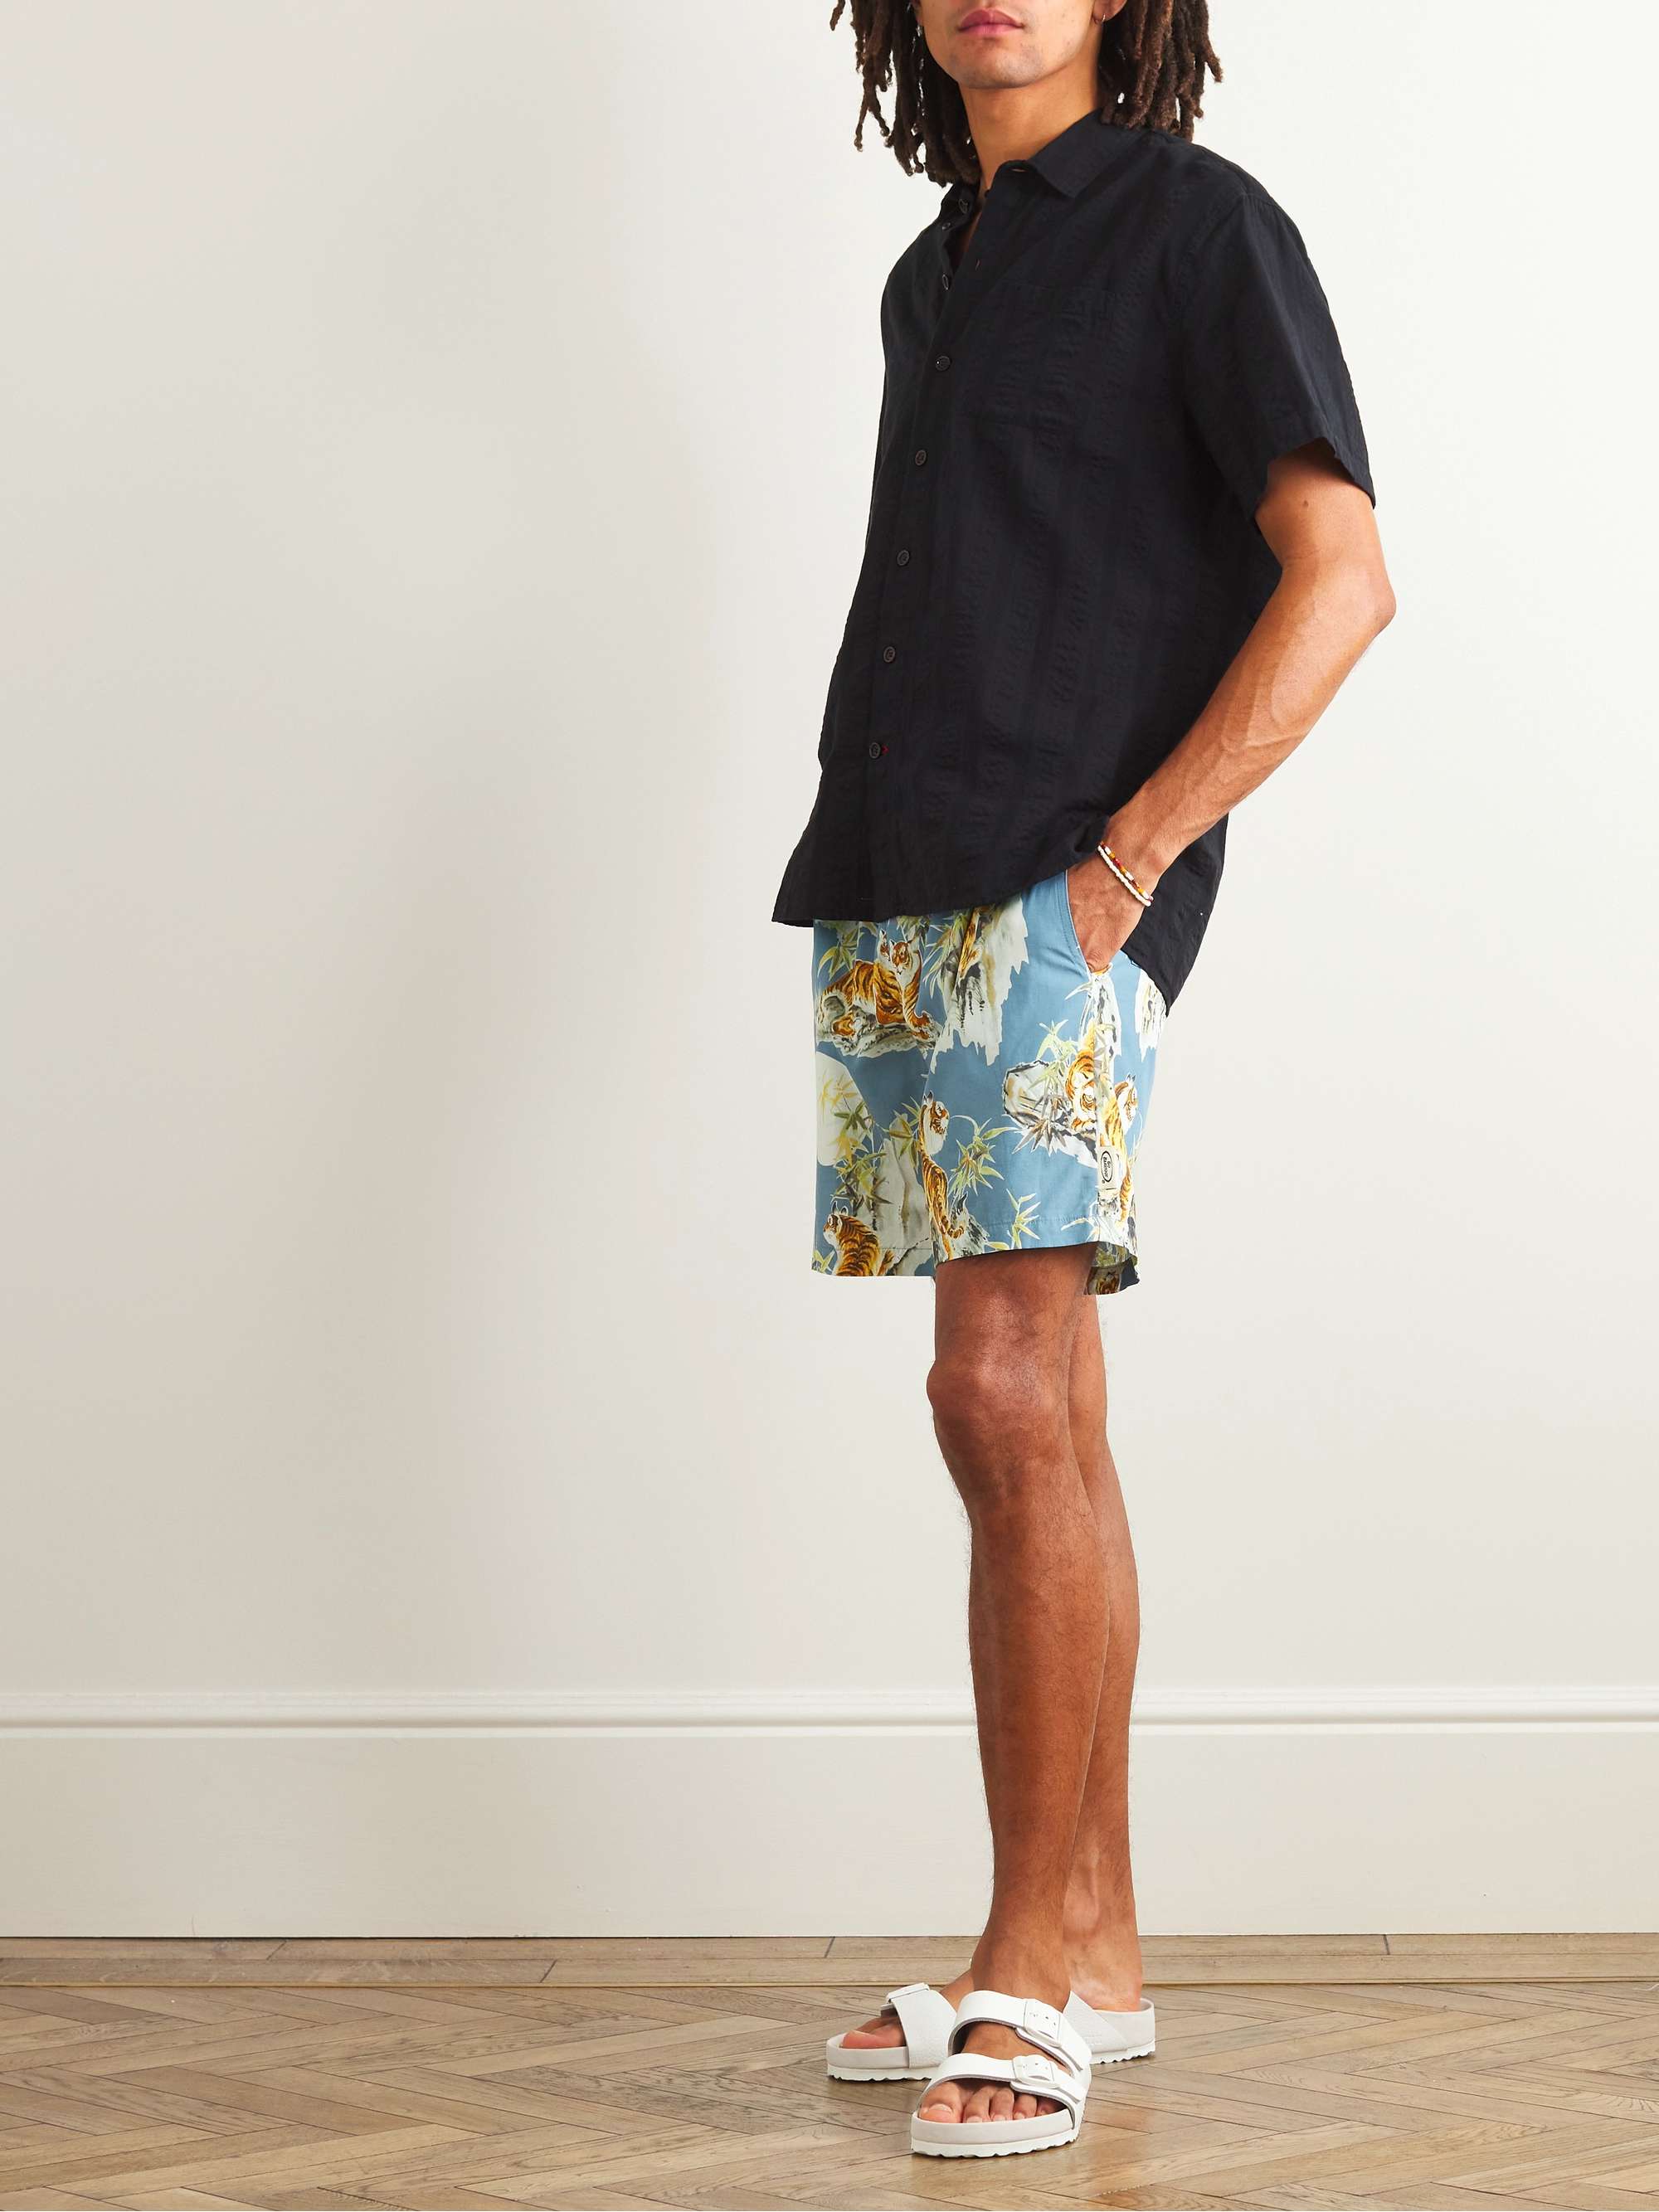 Explore Printed Shorts Mens under Mens Shorts Collection